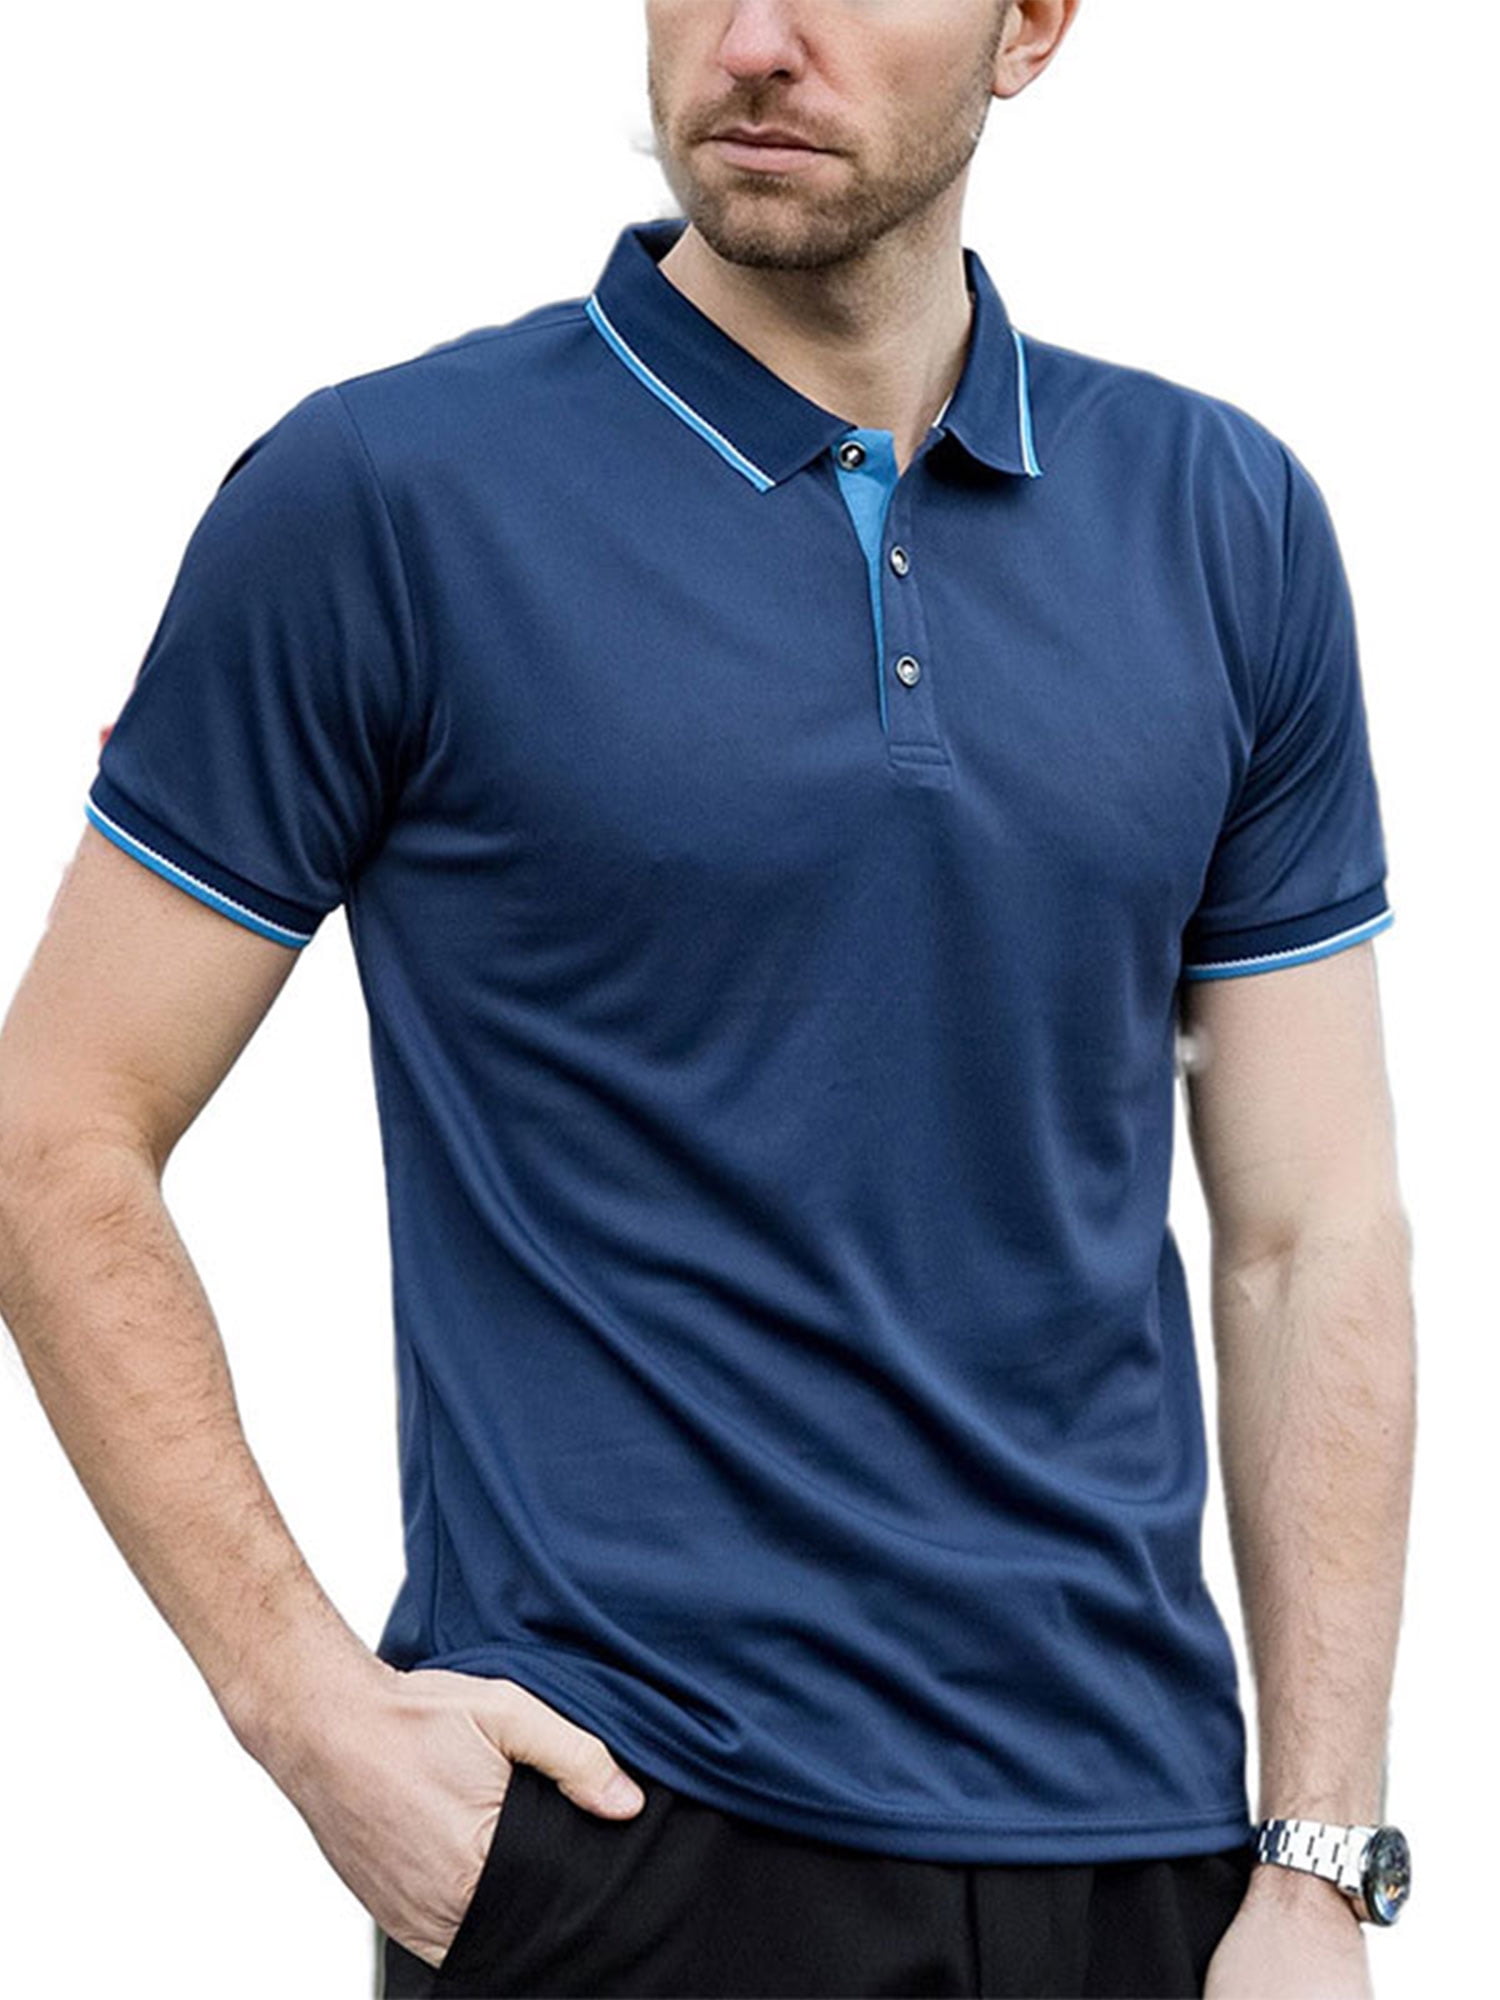 Niuer Summer Basic Polo Shirts Men Breathable Sportswear Tops Short ...